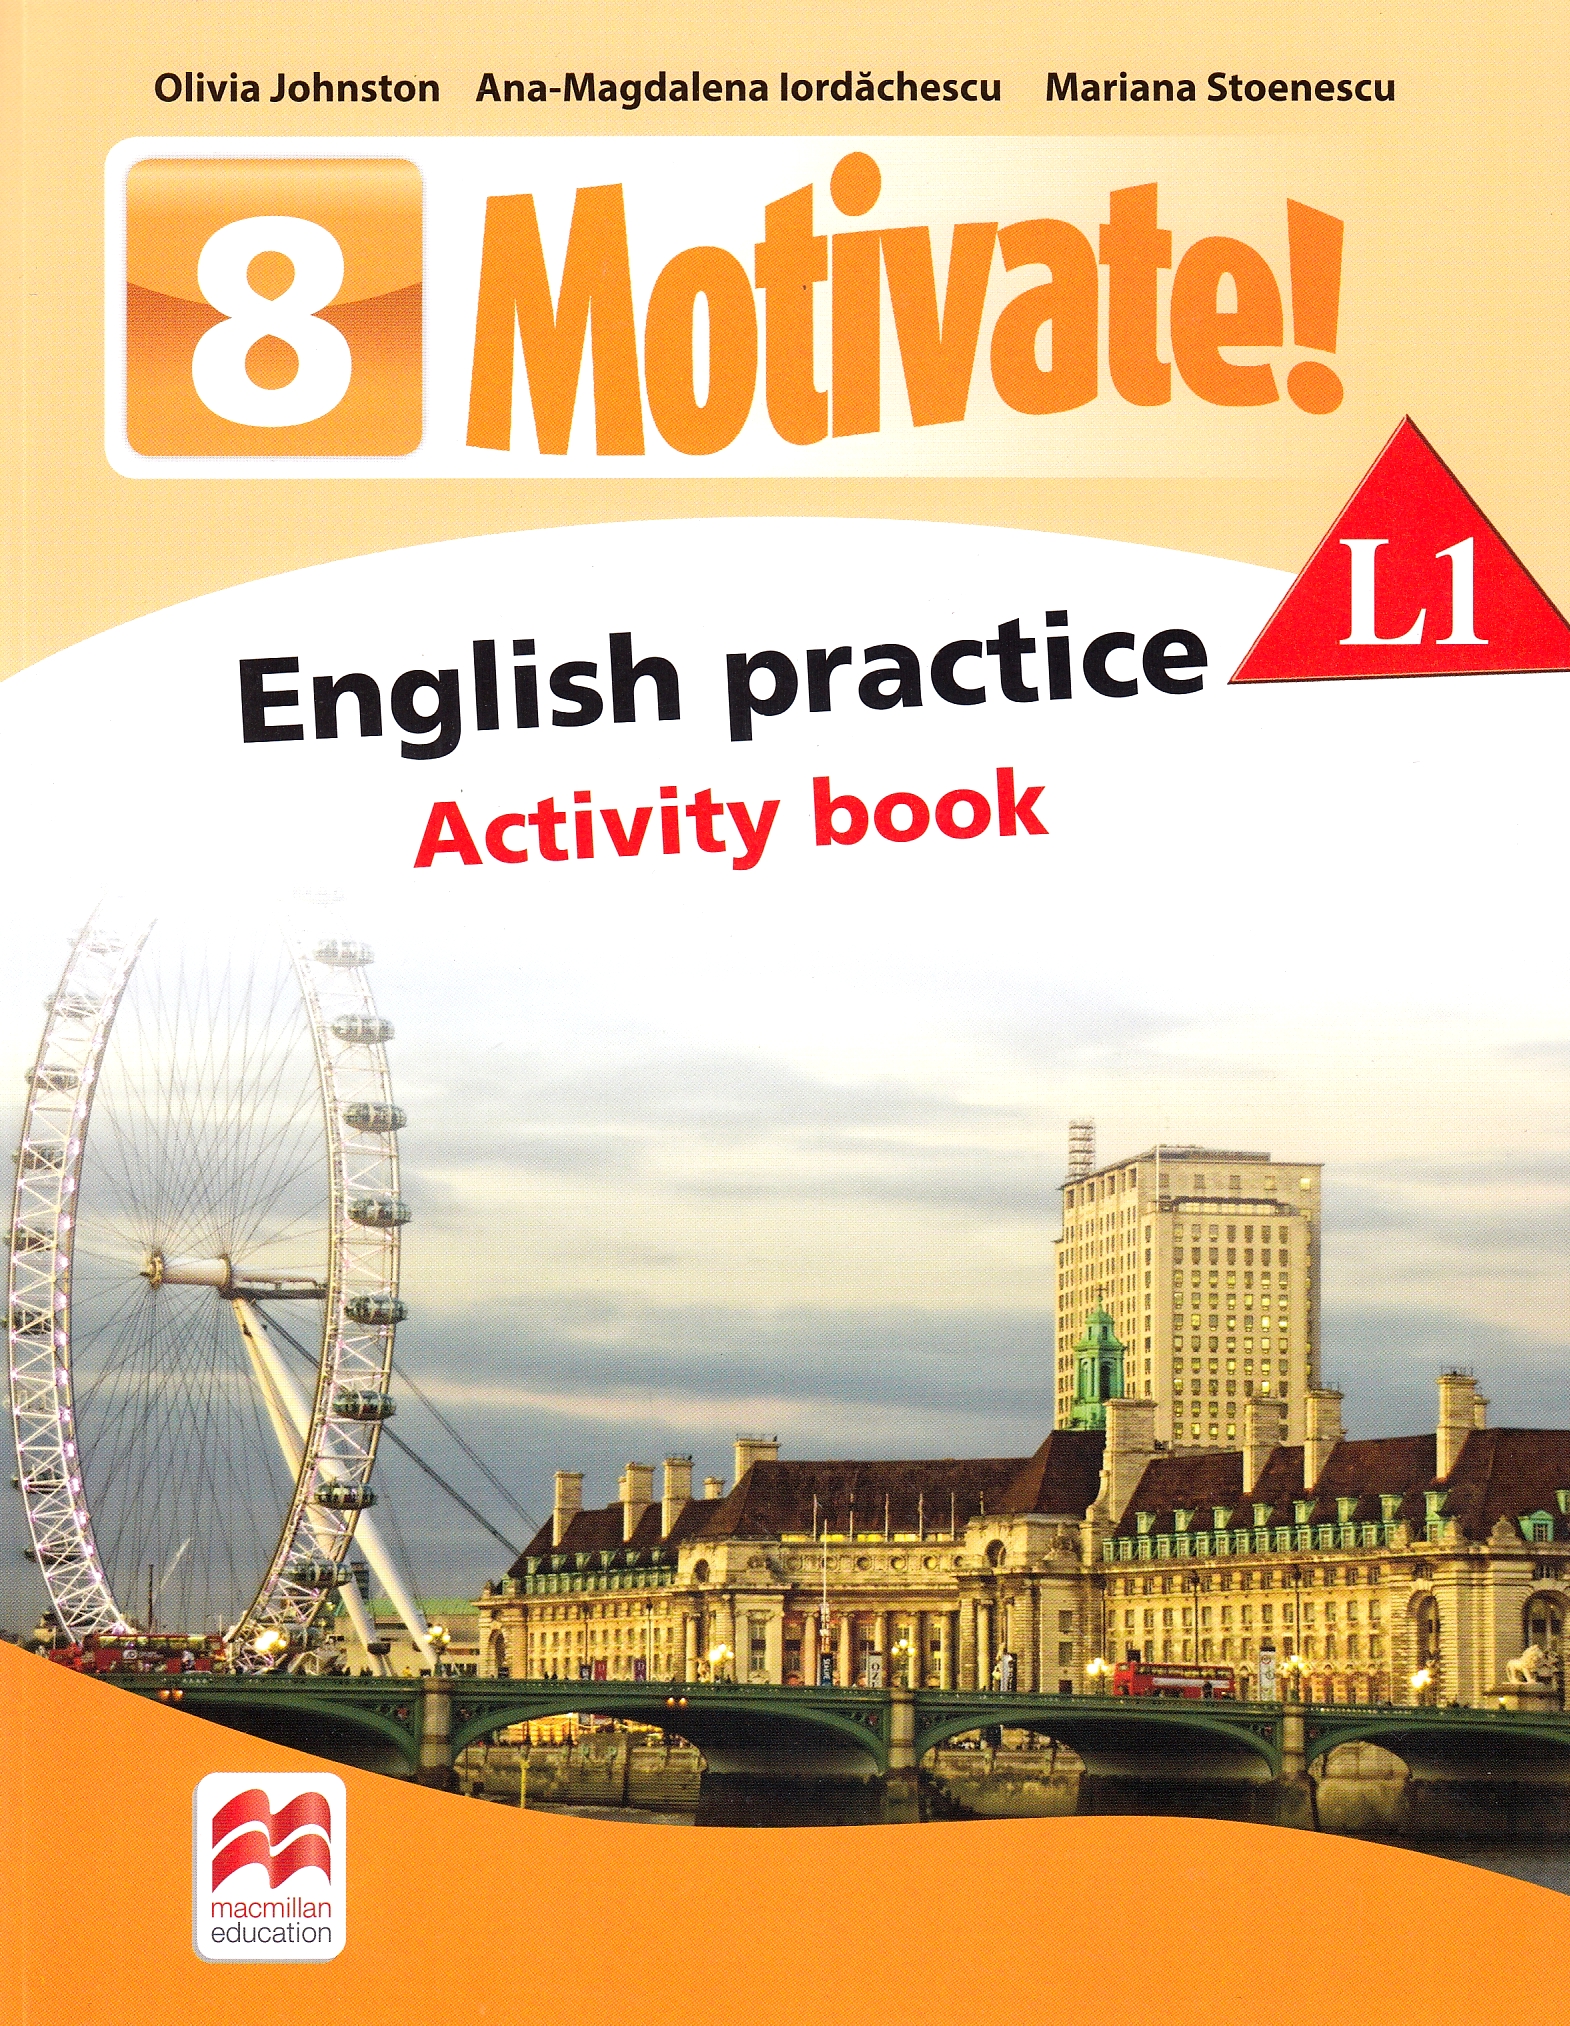 Motivate! English Practice L1. Activity book. Lectia de engleza - Clasa 8 - Olivia Johnston